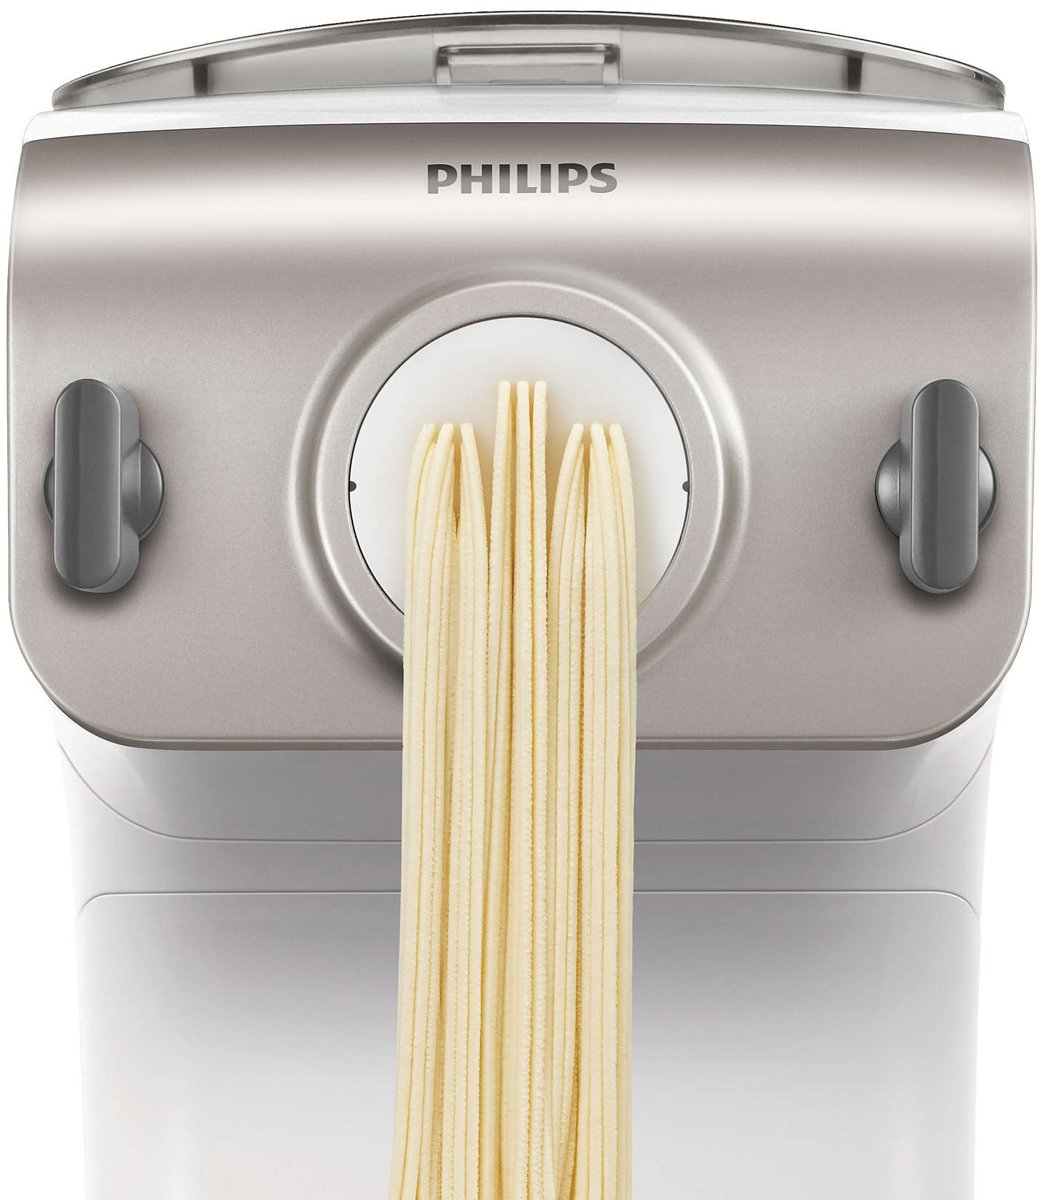 blanco Philips Premium collection HR2355/12 200 W, 220-240, 215 mm, 343 mm, 300 mm, 7,5 kg Máquina para pasta 